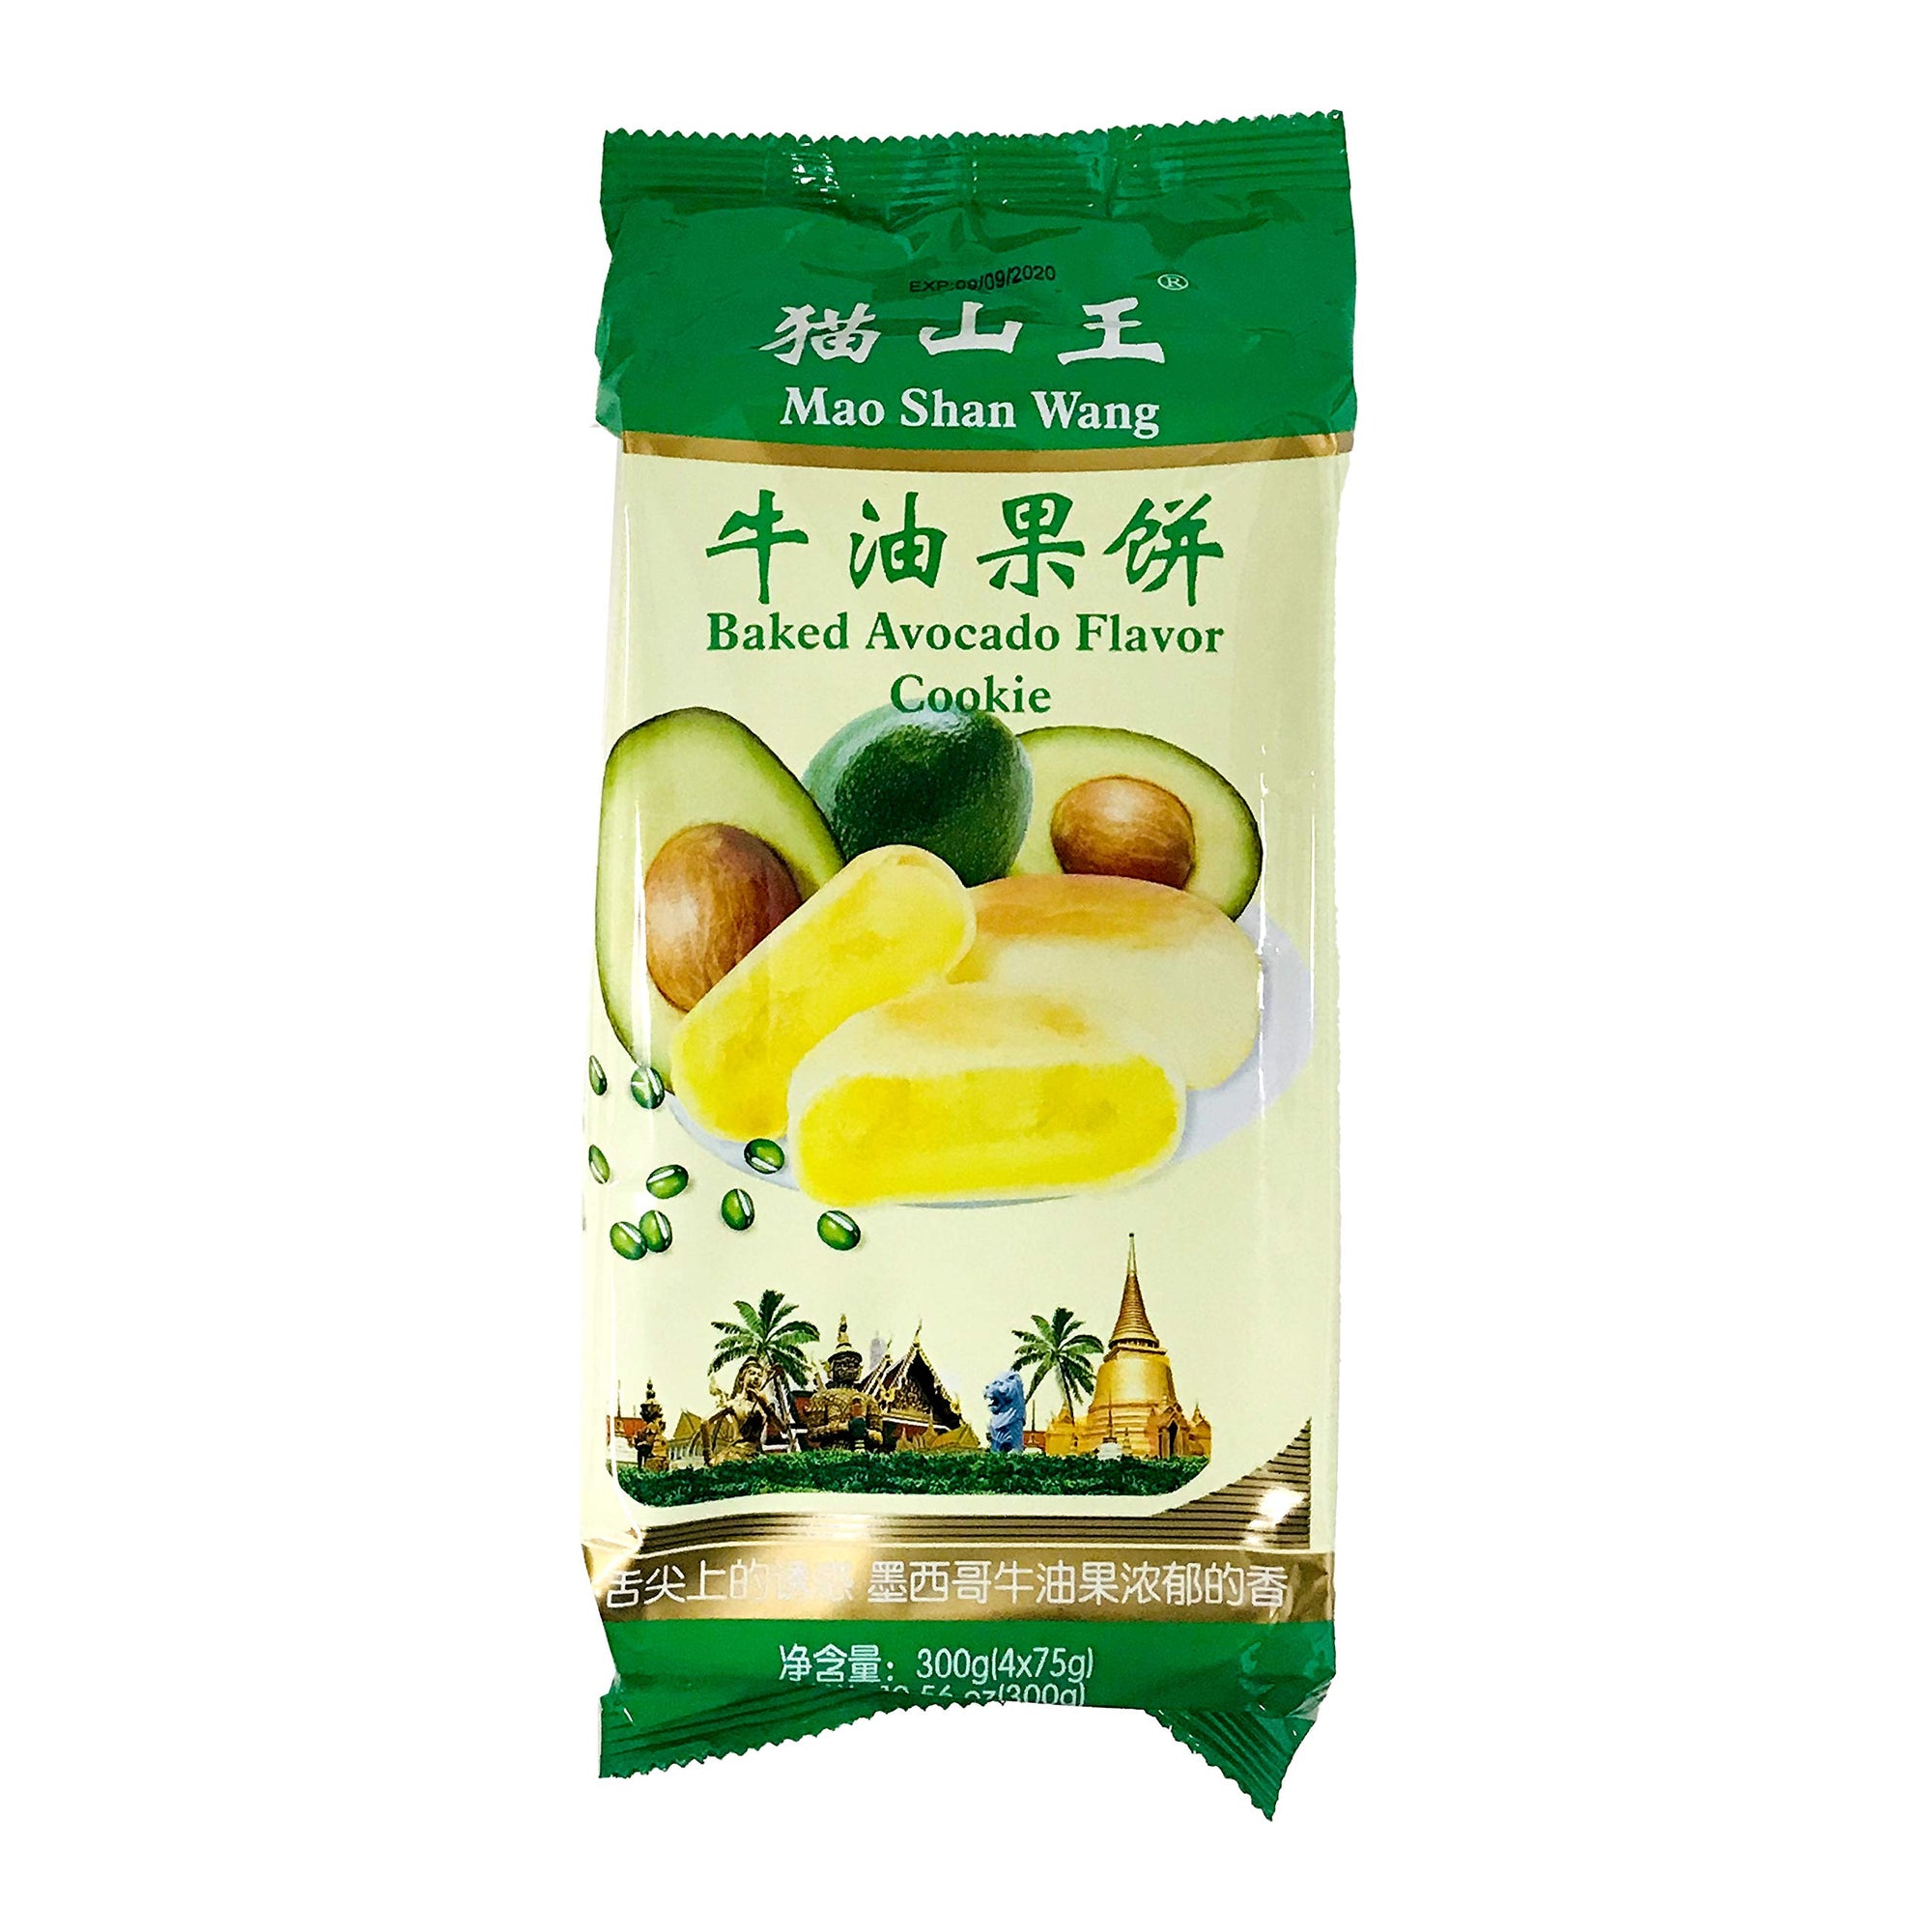 Mao Shan Wang Fruit Flavor Cookie 猫山王果饼 (Baked Avocado Flavor Cookie牛油果饼, pack of 4)